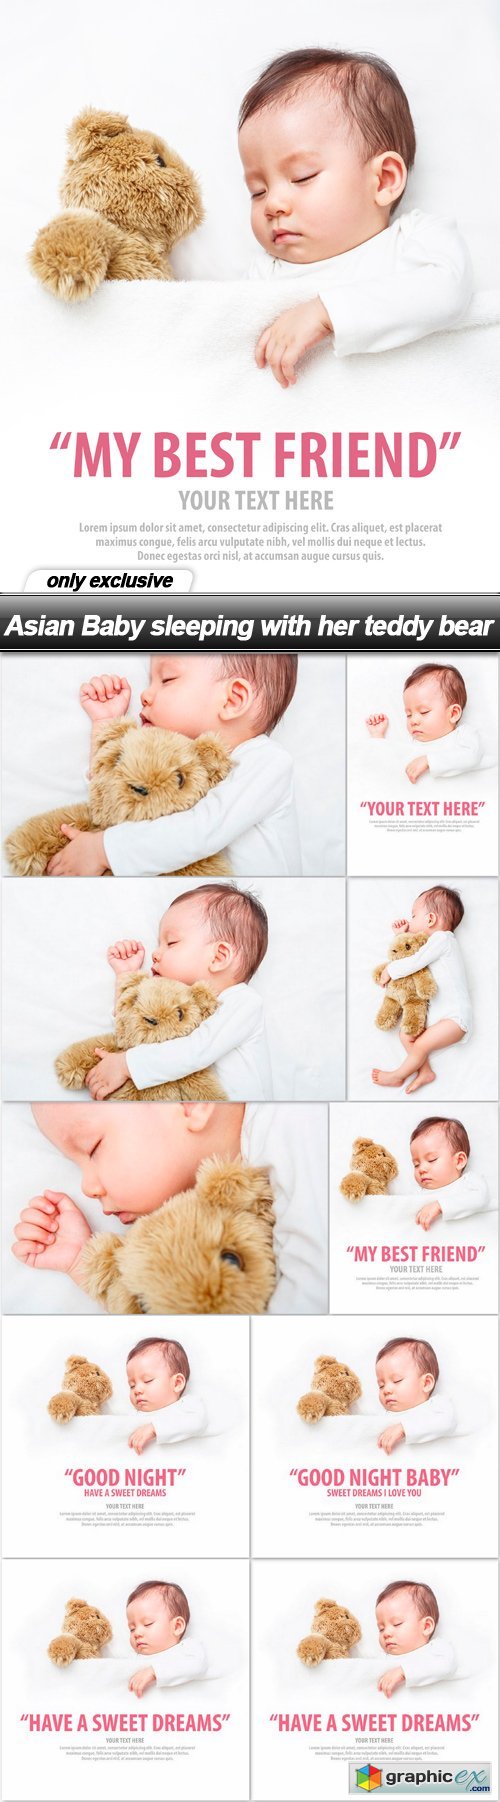 Asian Baby sleeping with her teddy bear - 10 UHQ JPEG